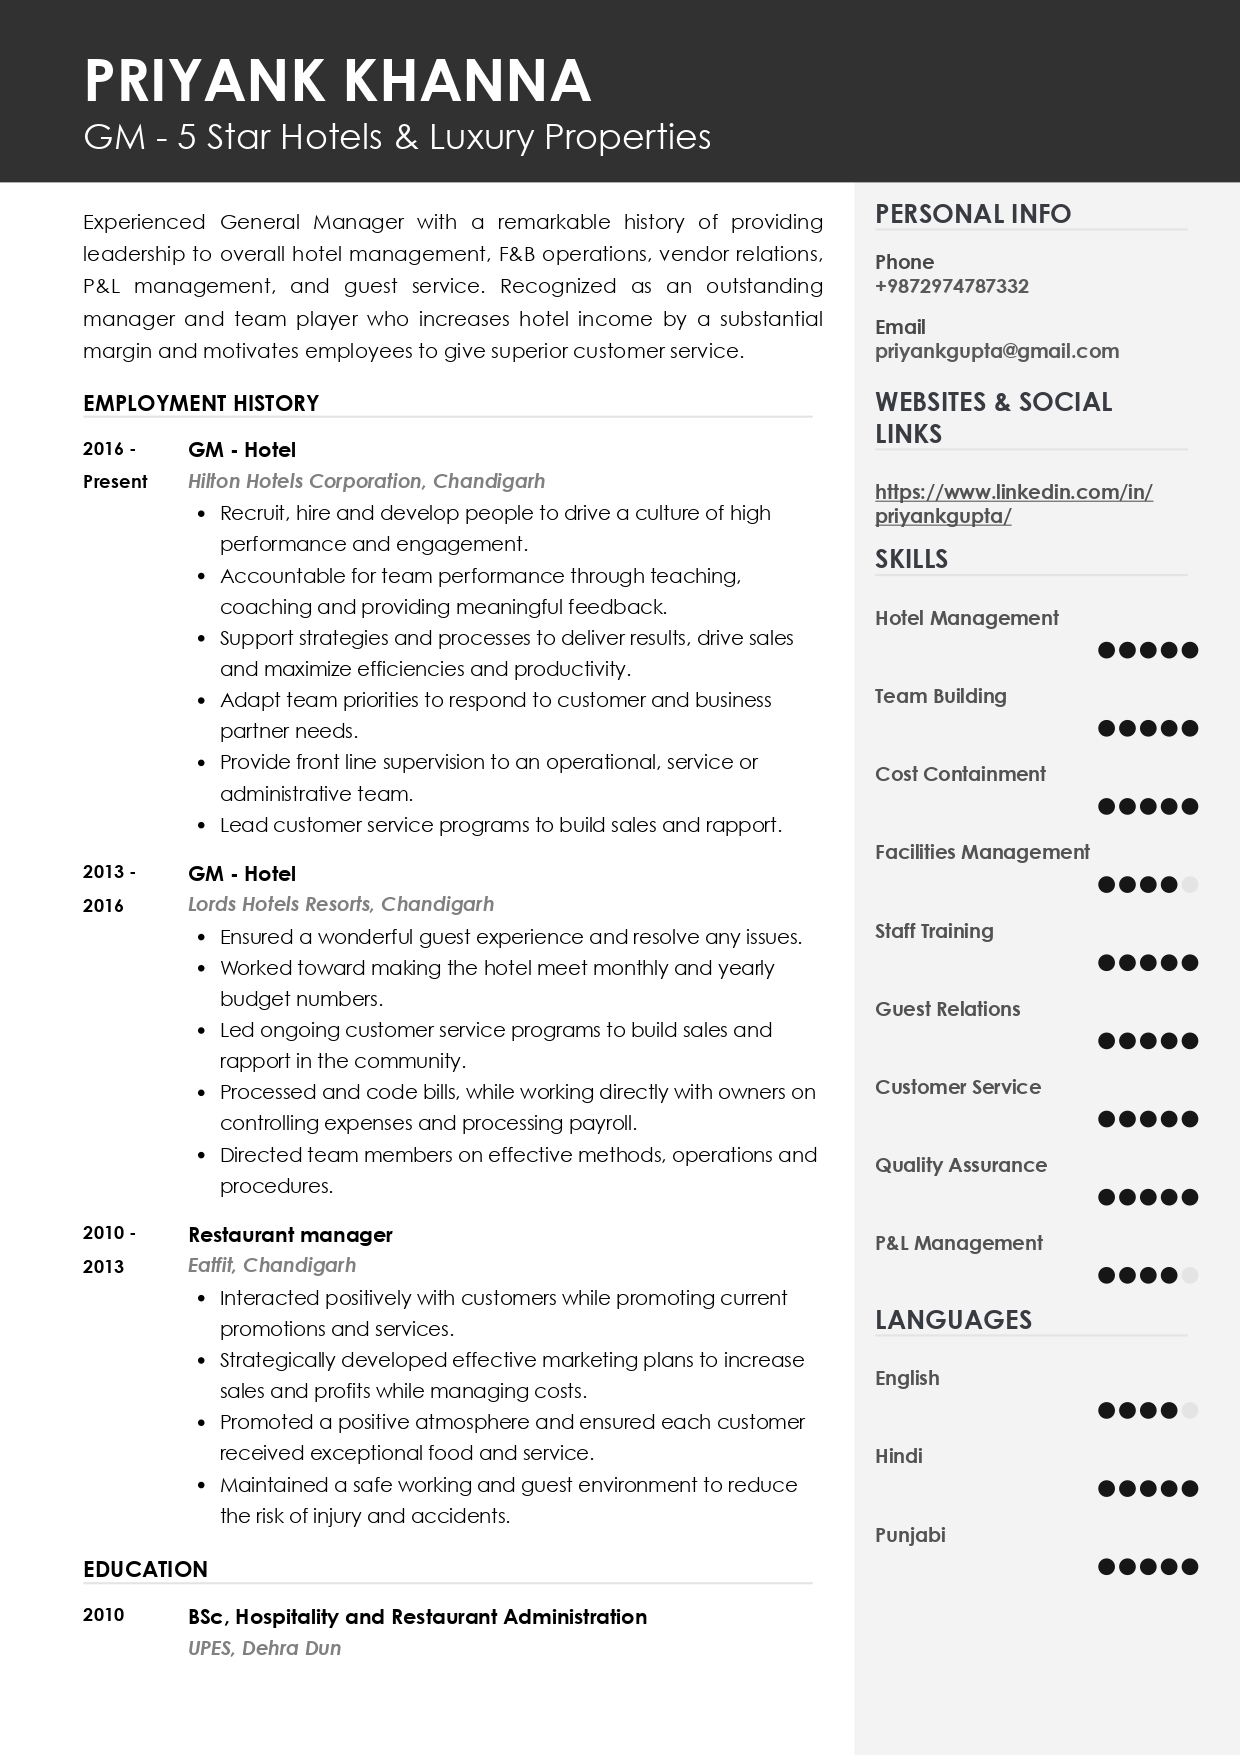 Resume of GM-Hotel